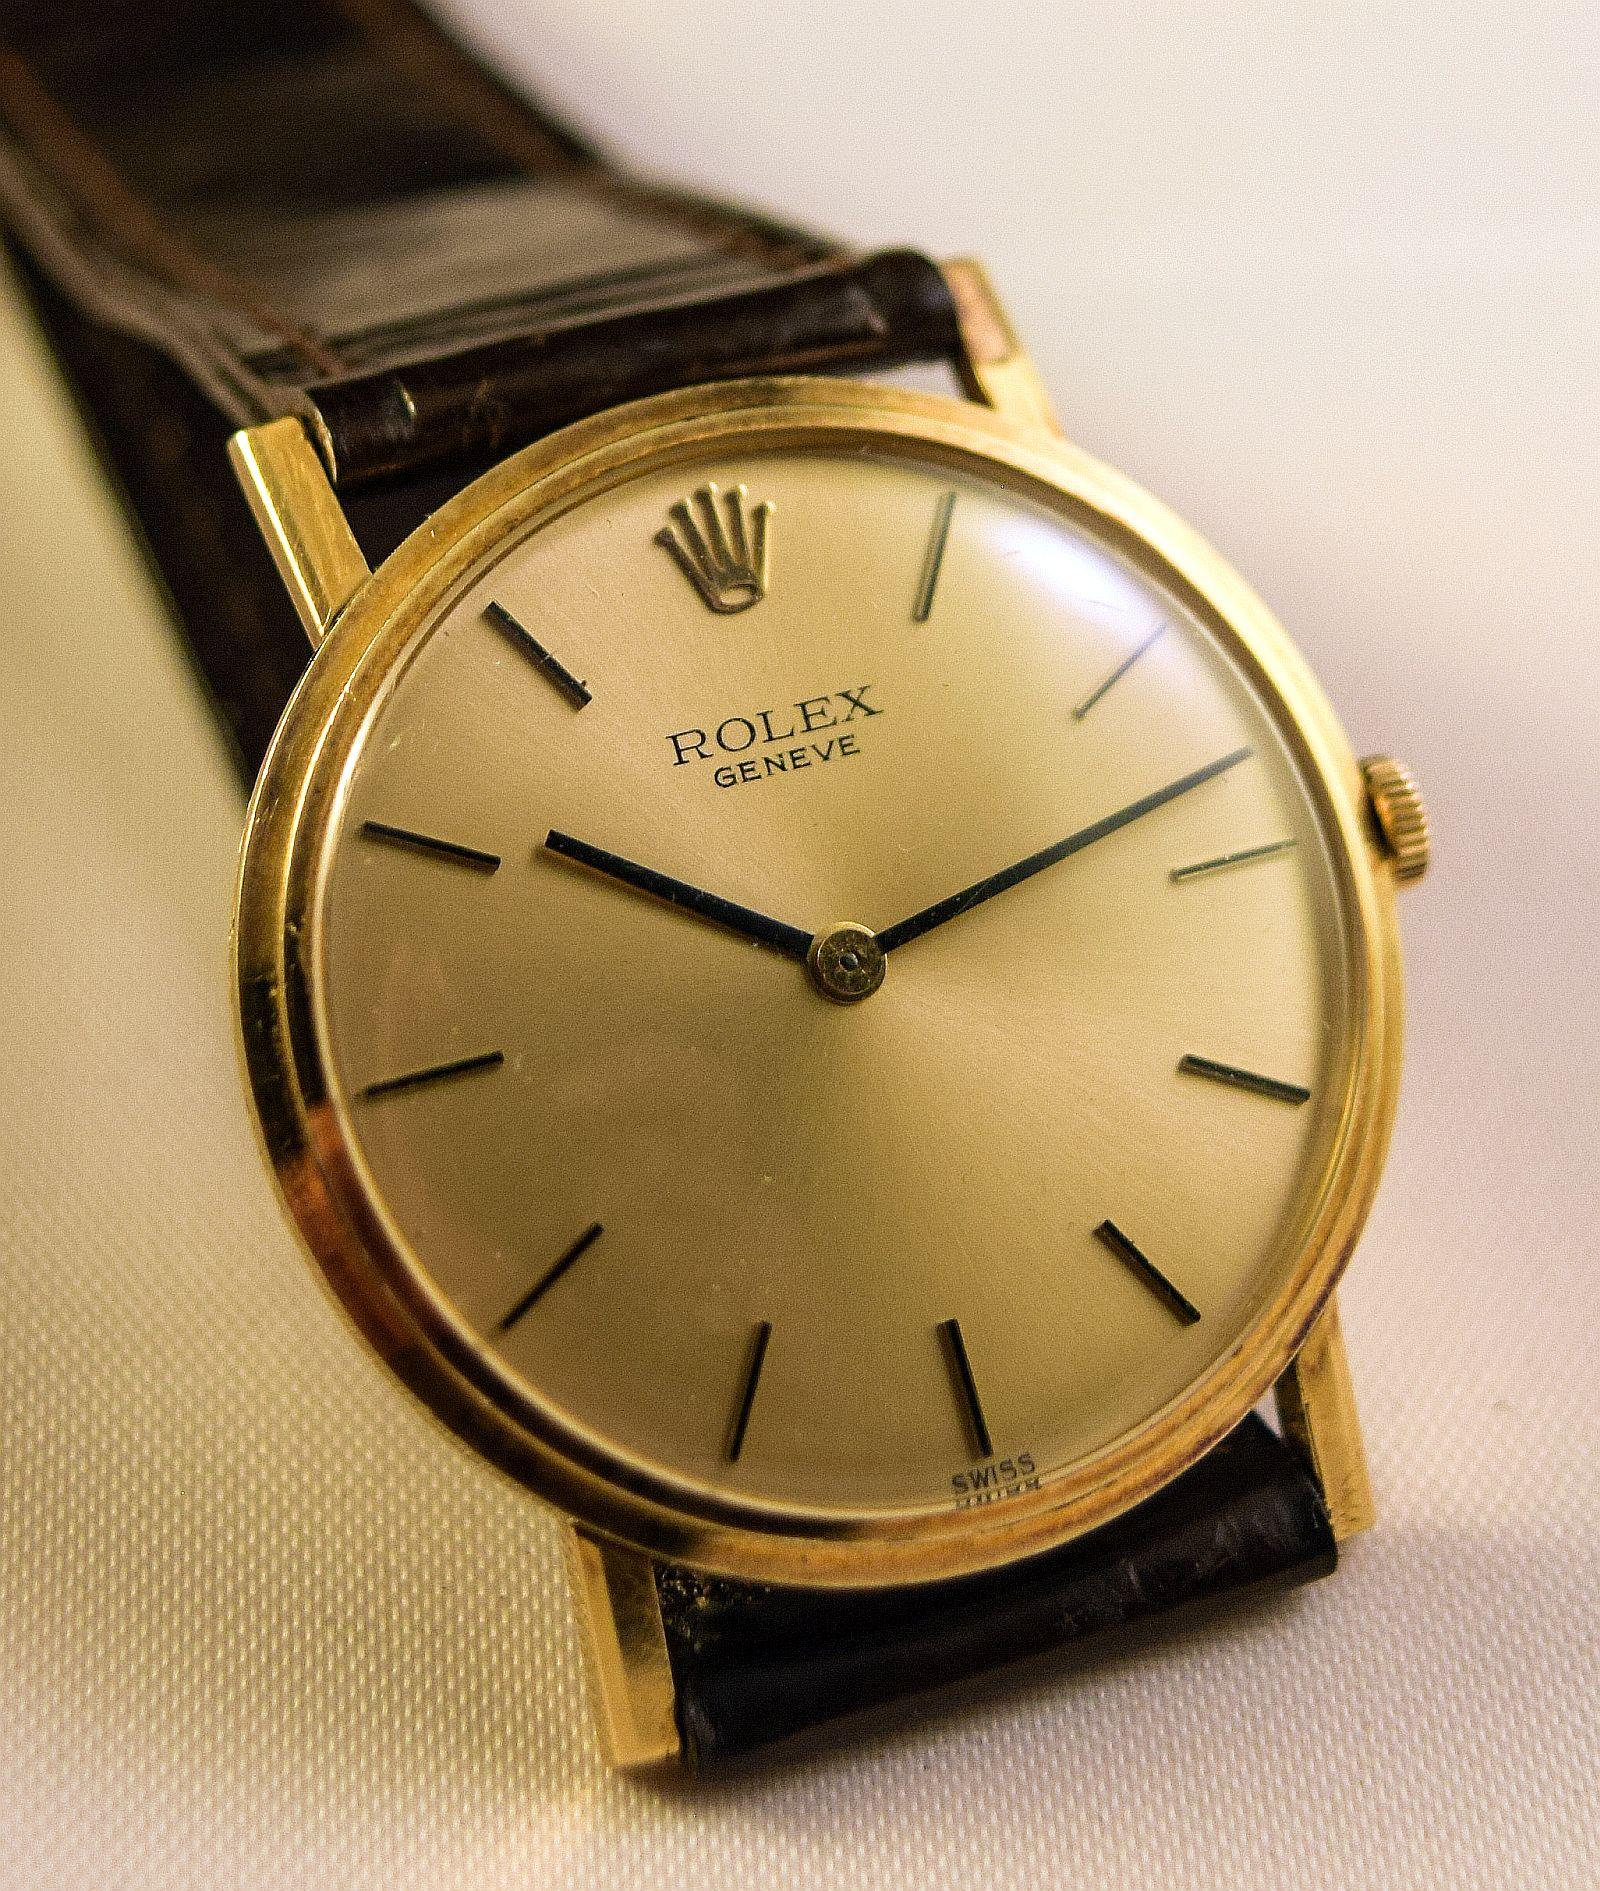 Rolex Geneve a very elegant 18 karat extra slim watch For Sale 5